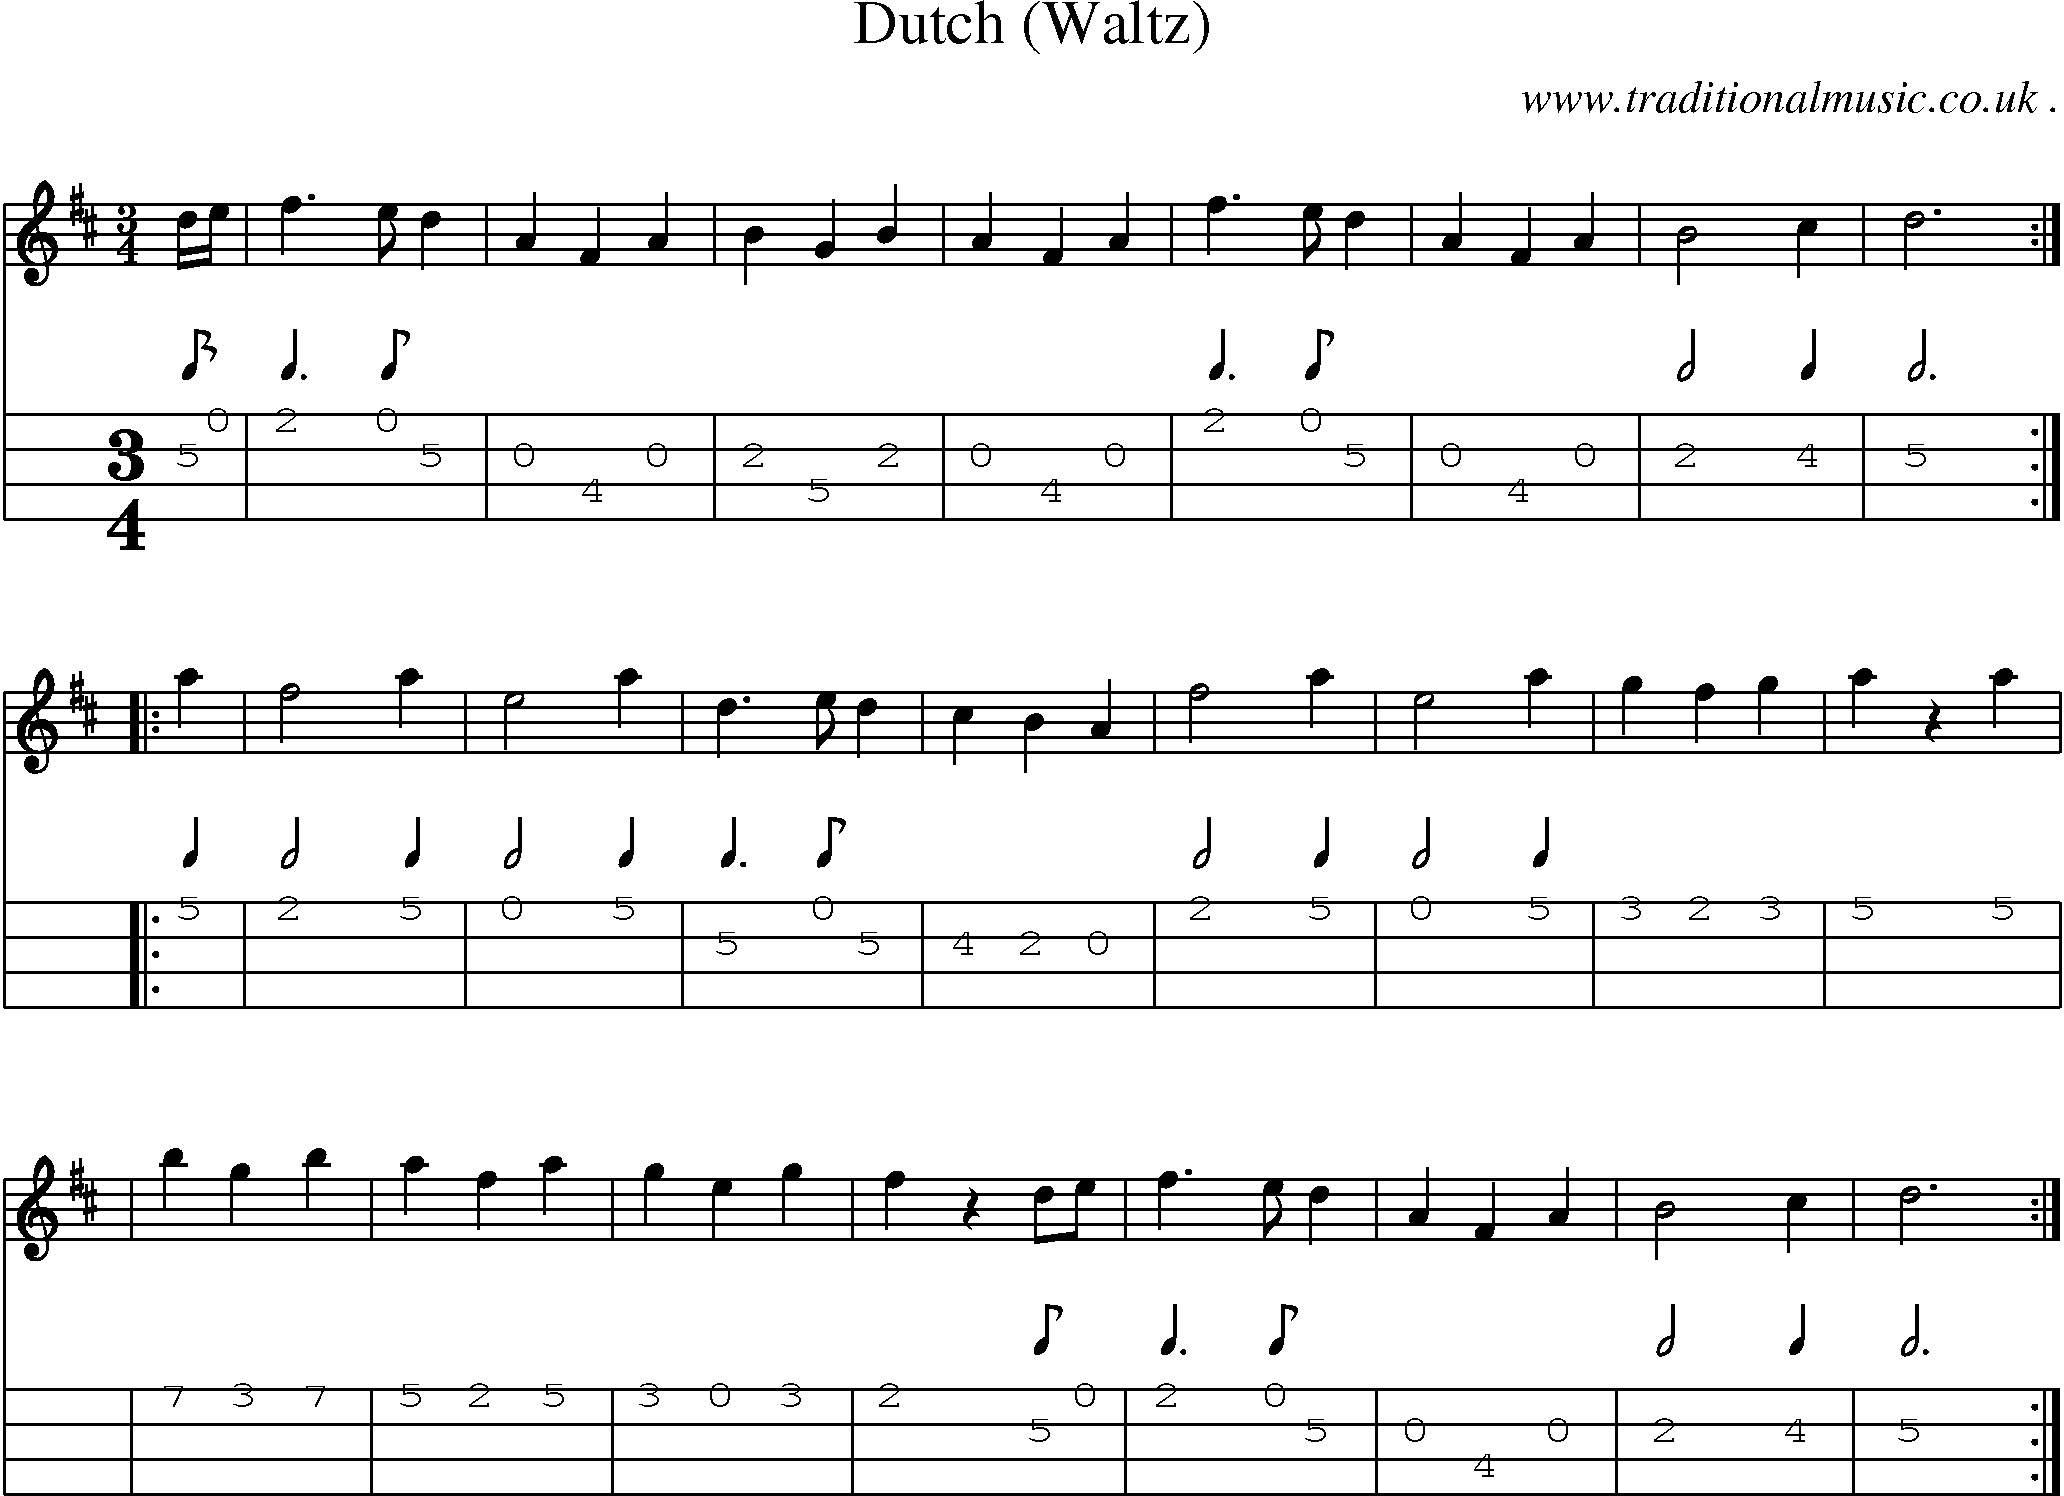 Sheet-music  score, Chords and Mandolin Tabs for Dutch Waltz